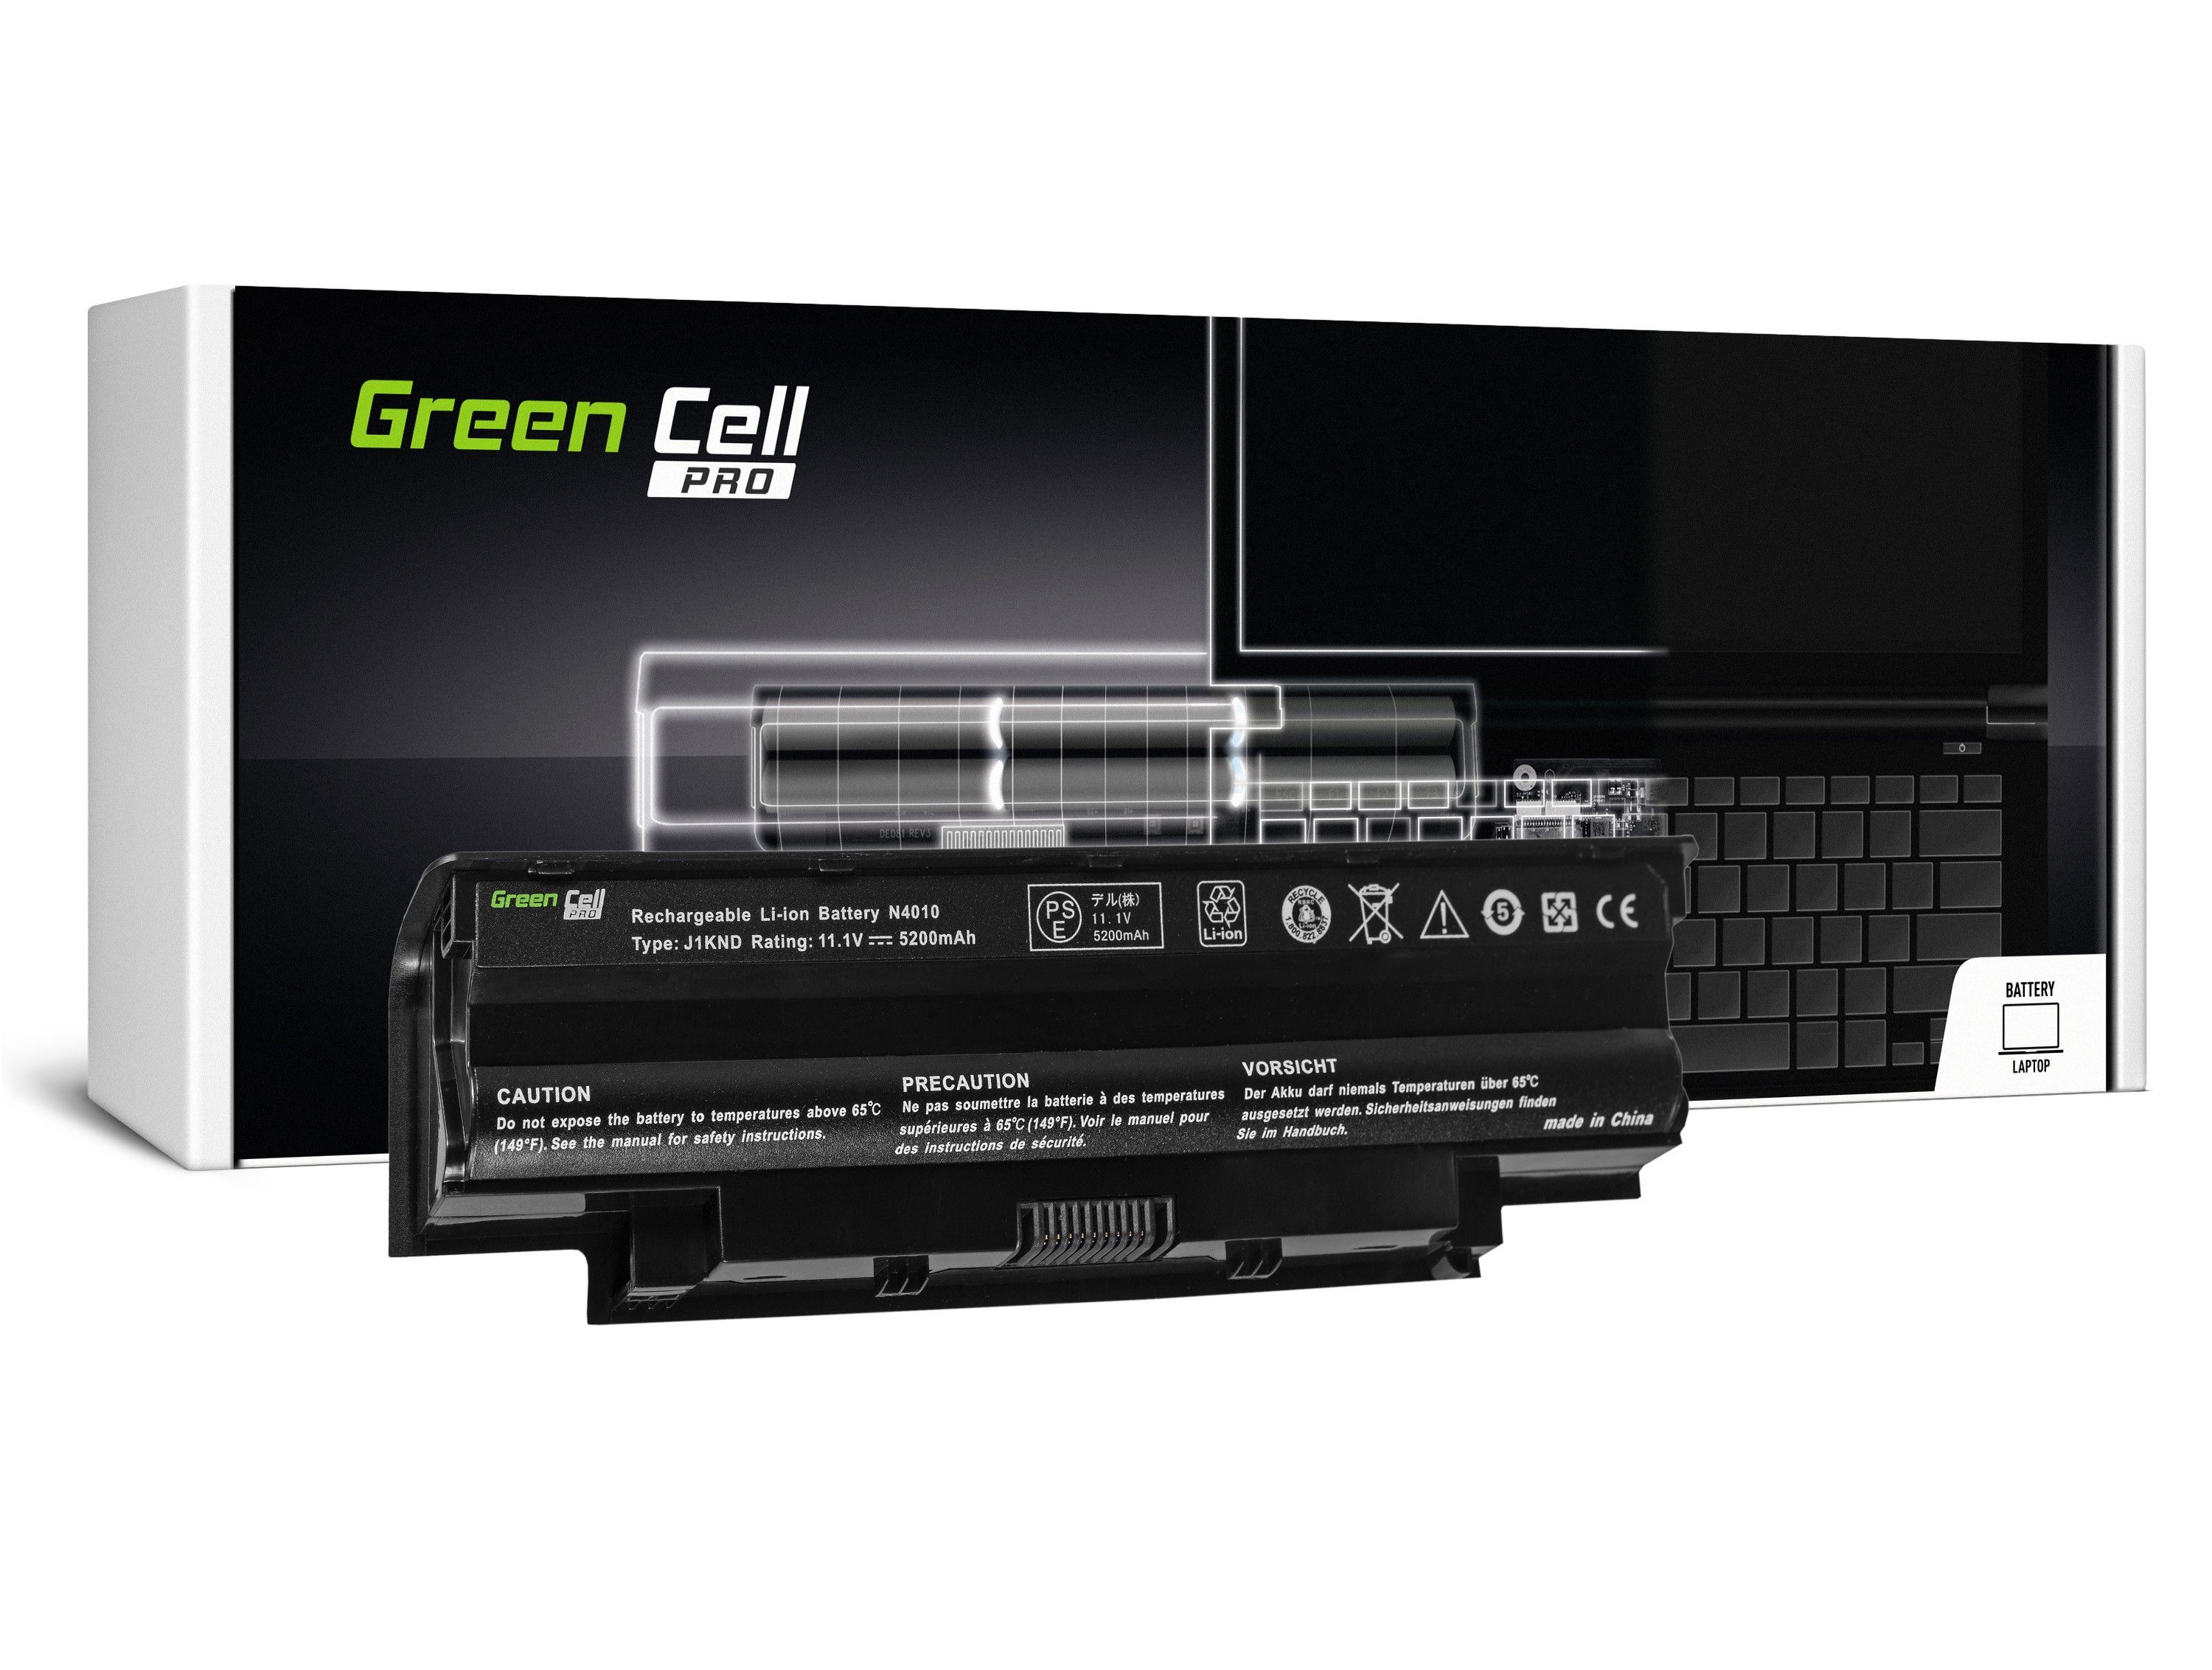 Green Cell PRO kannetavan akku Dell Inspiron N3010 N4010 N5010 13R 14R 15R J1